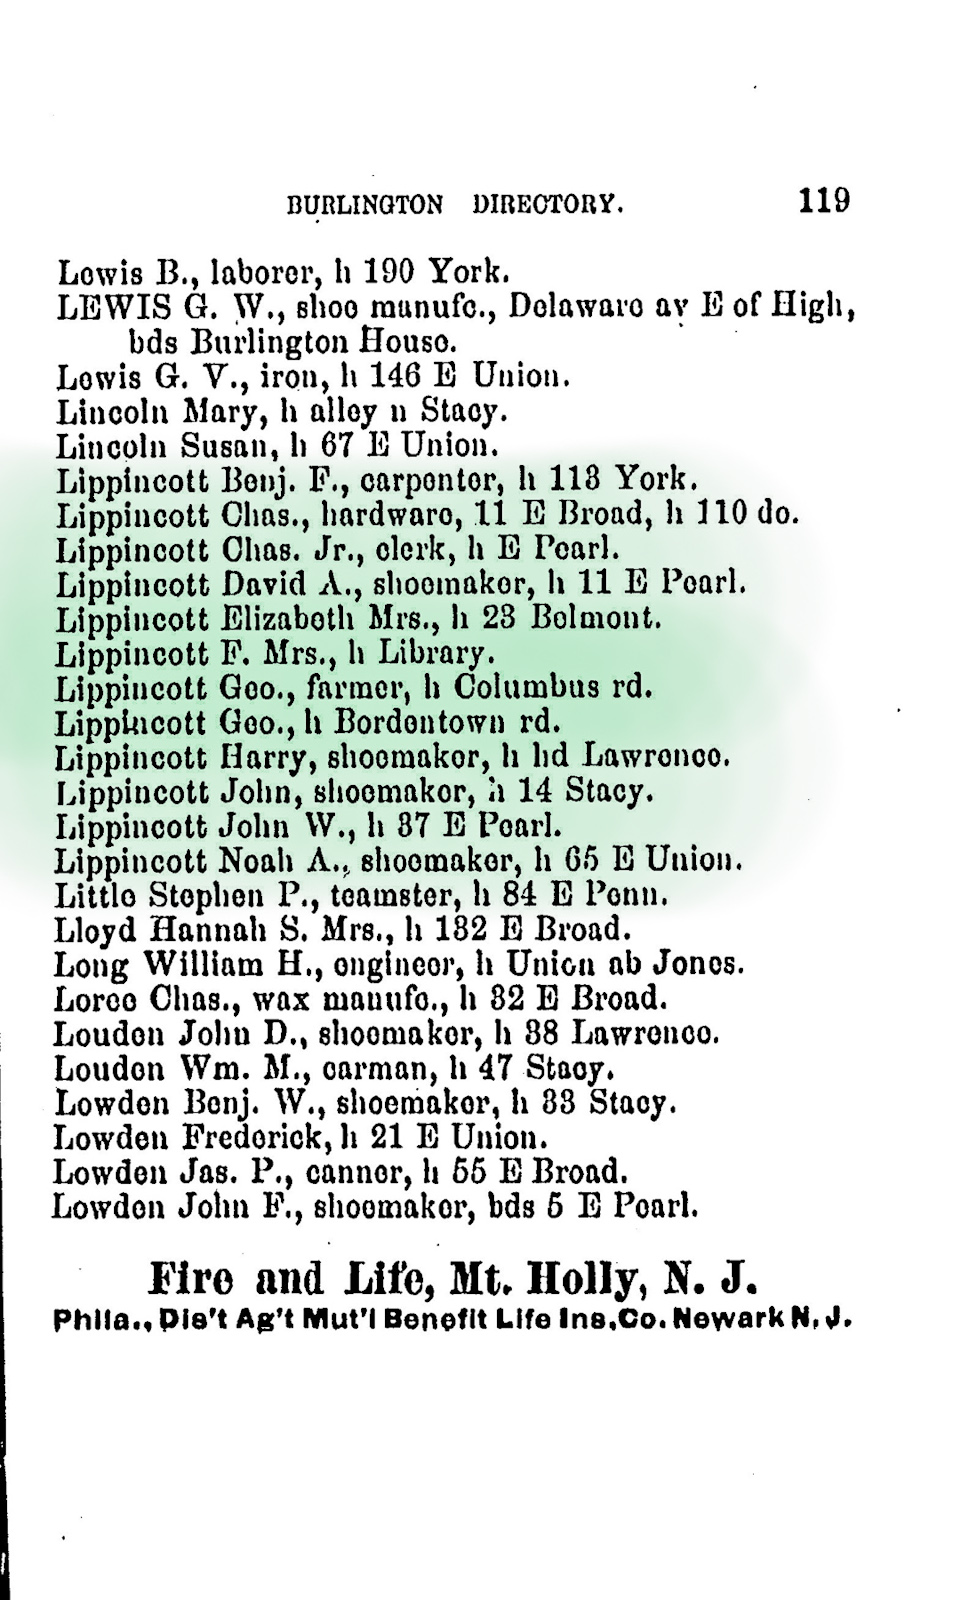 Info - Burlington County directory for 1876-77